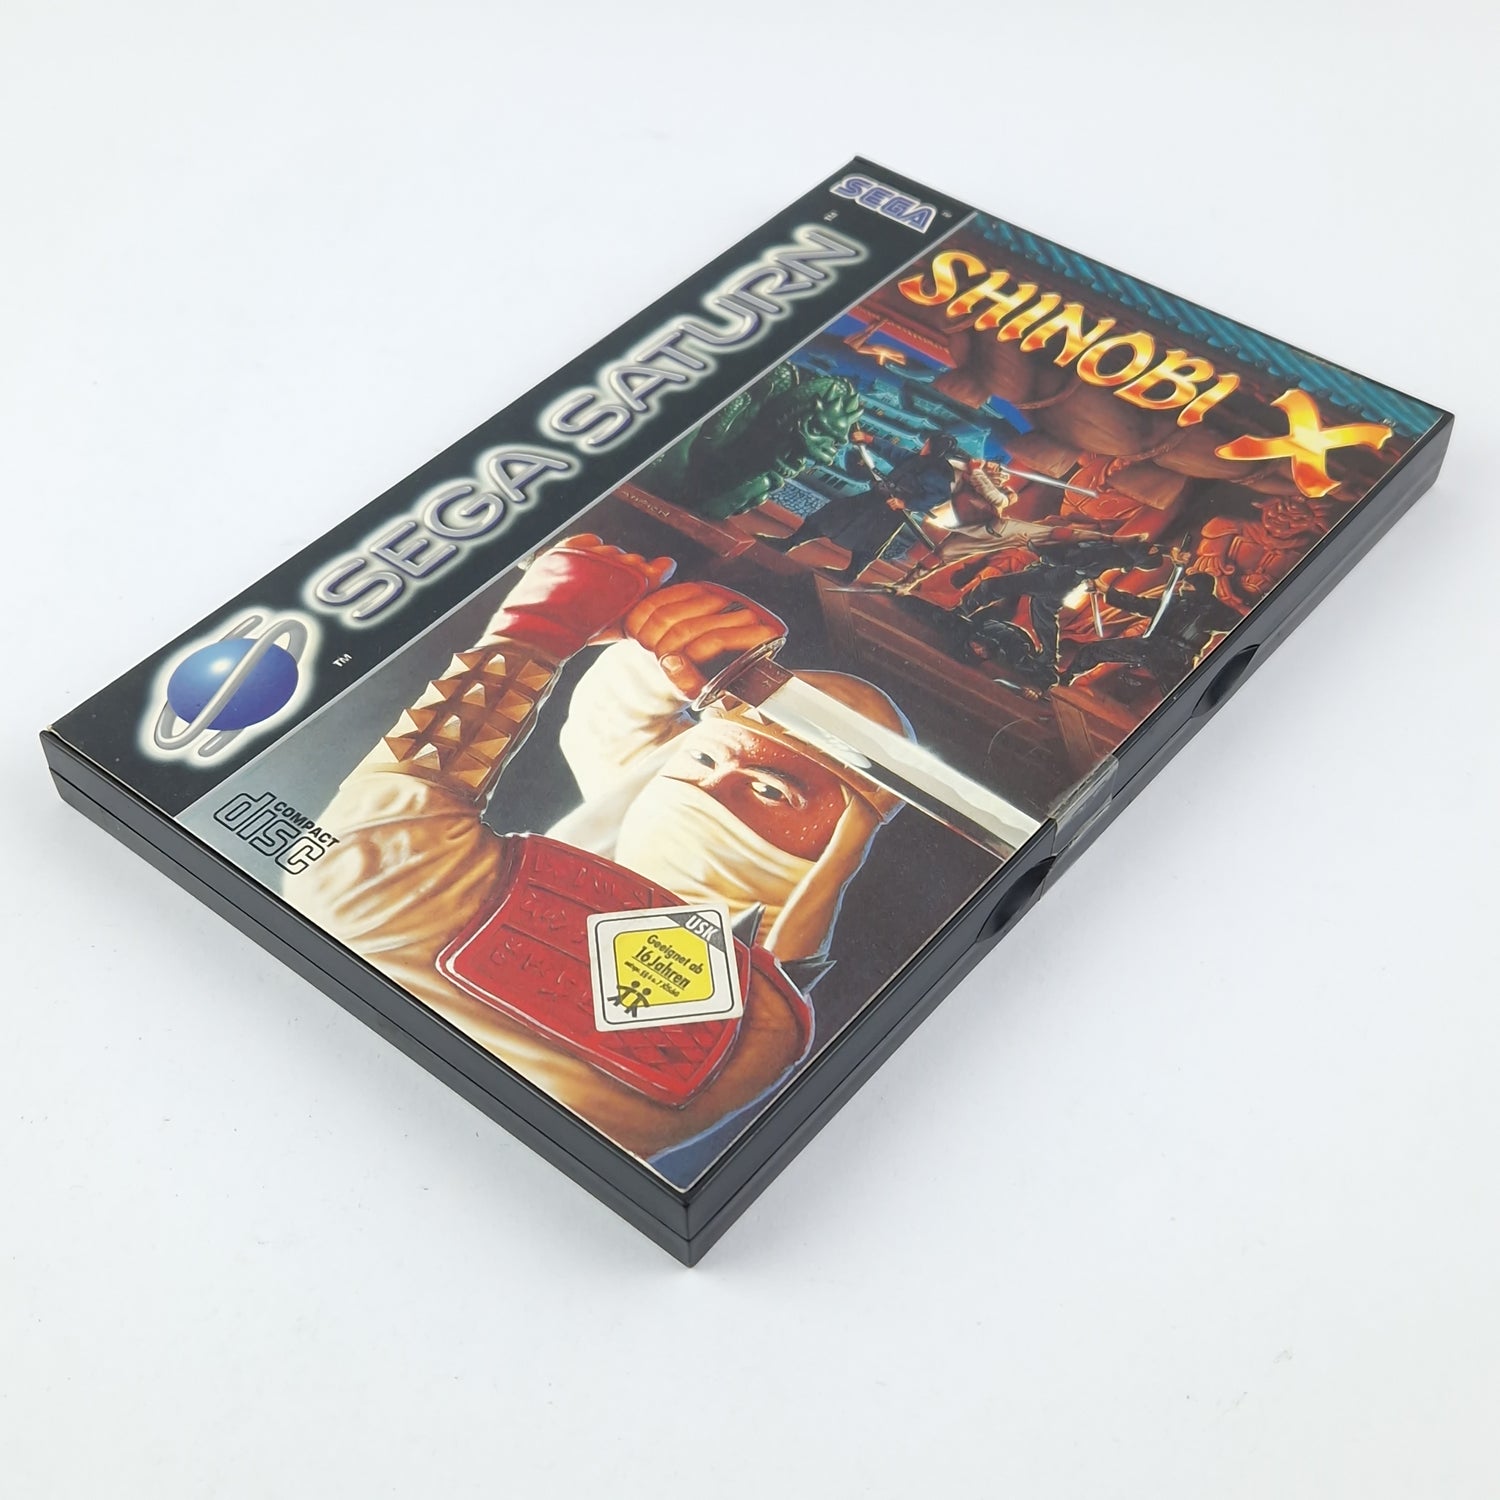 Sega Saturn Game: Shinobi X - CD Instructions OVP cib / PAL Disk System